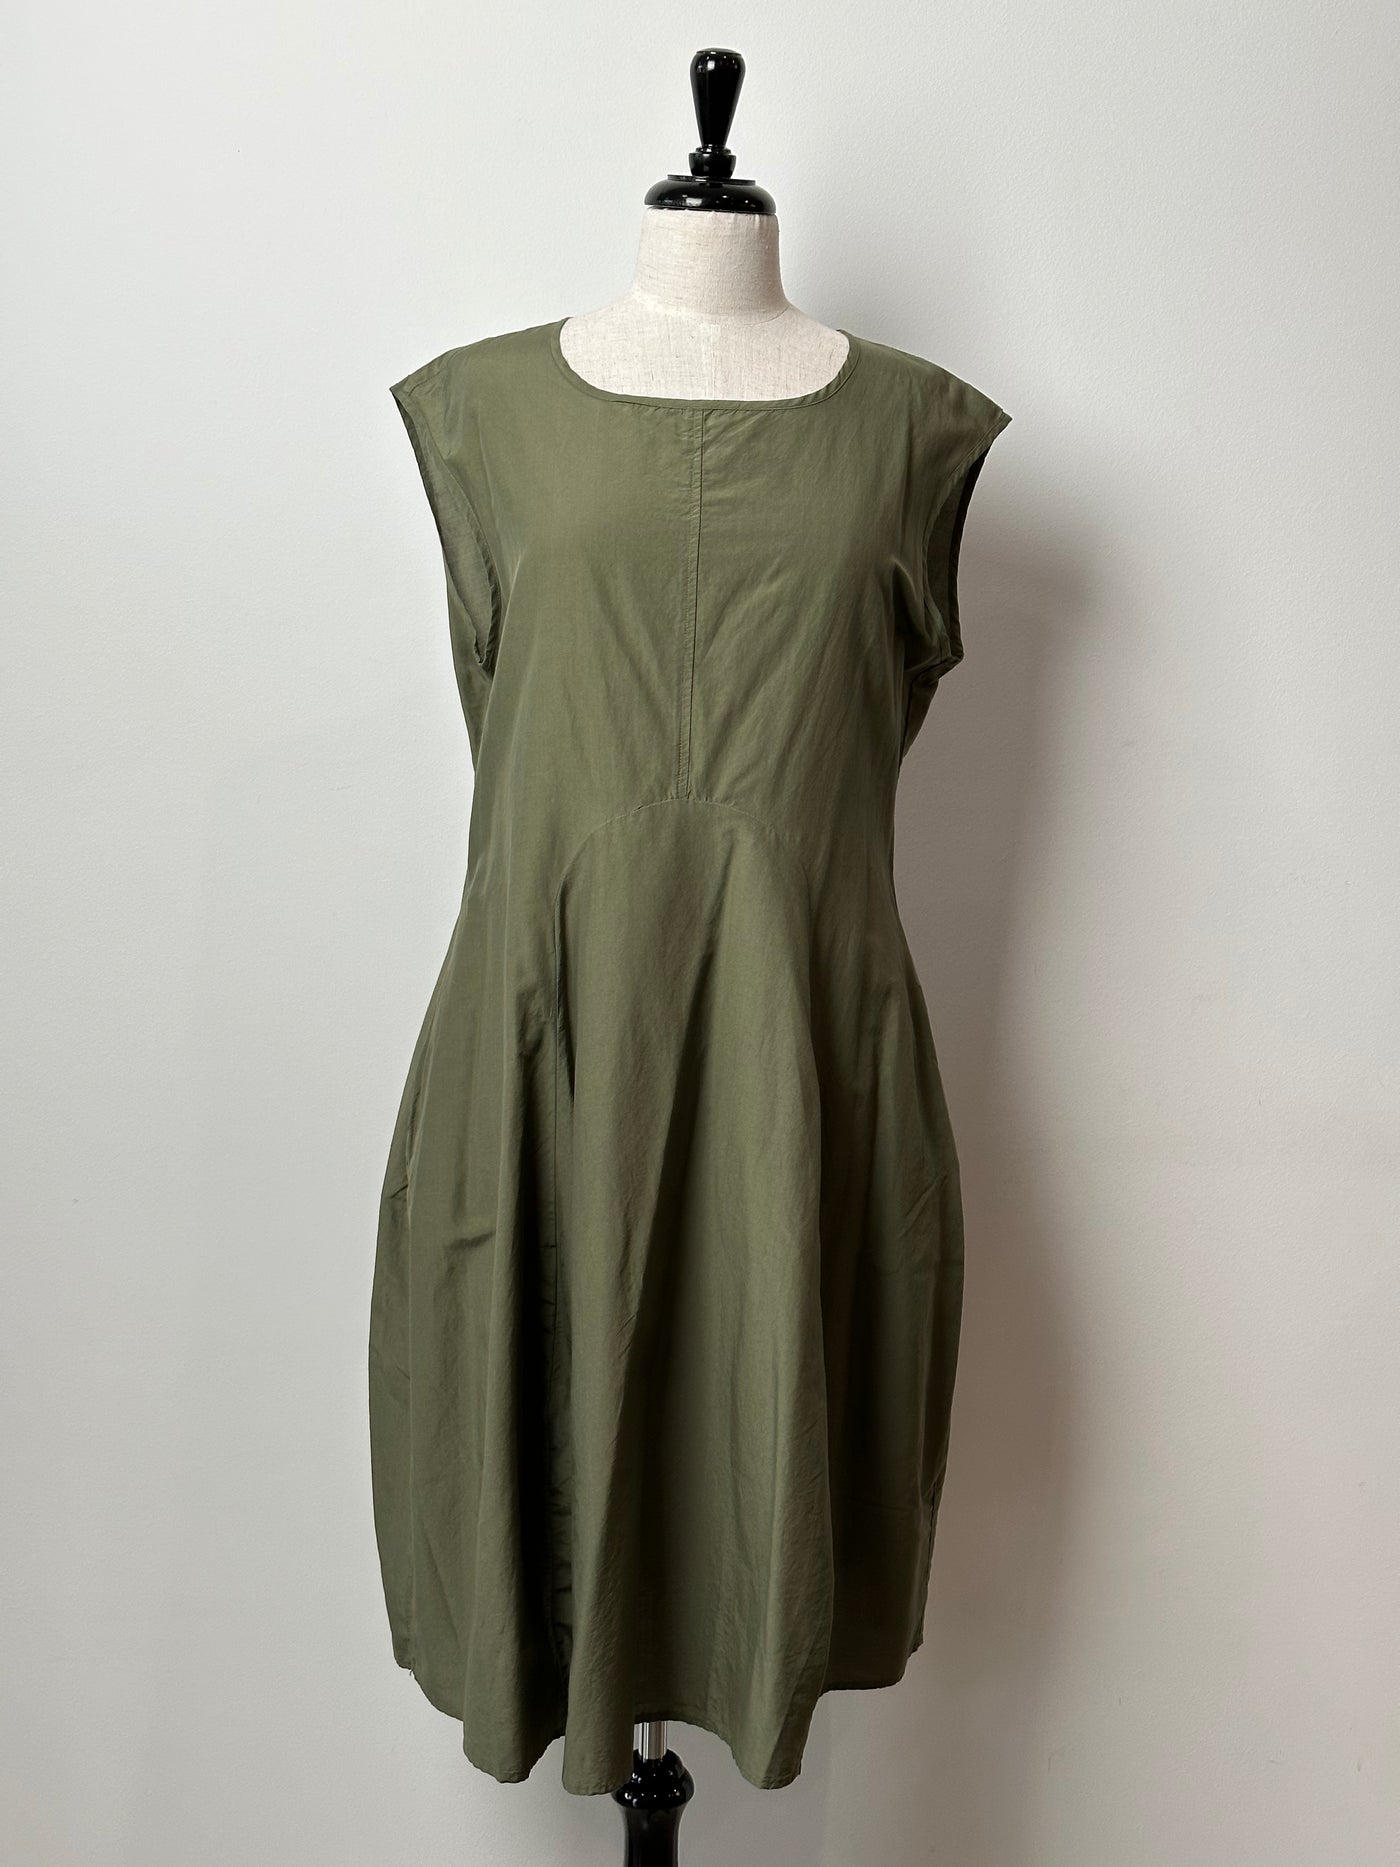 Valia - Claudette Dress. Olive